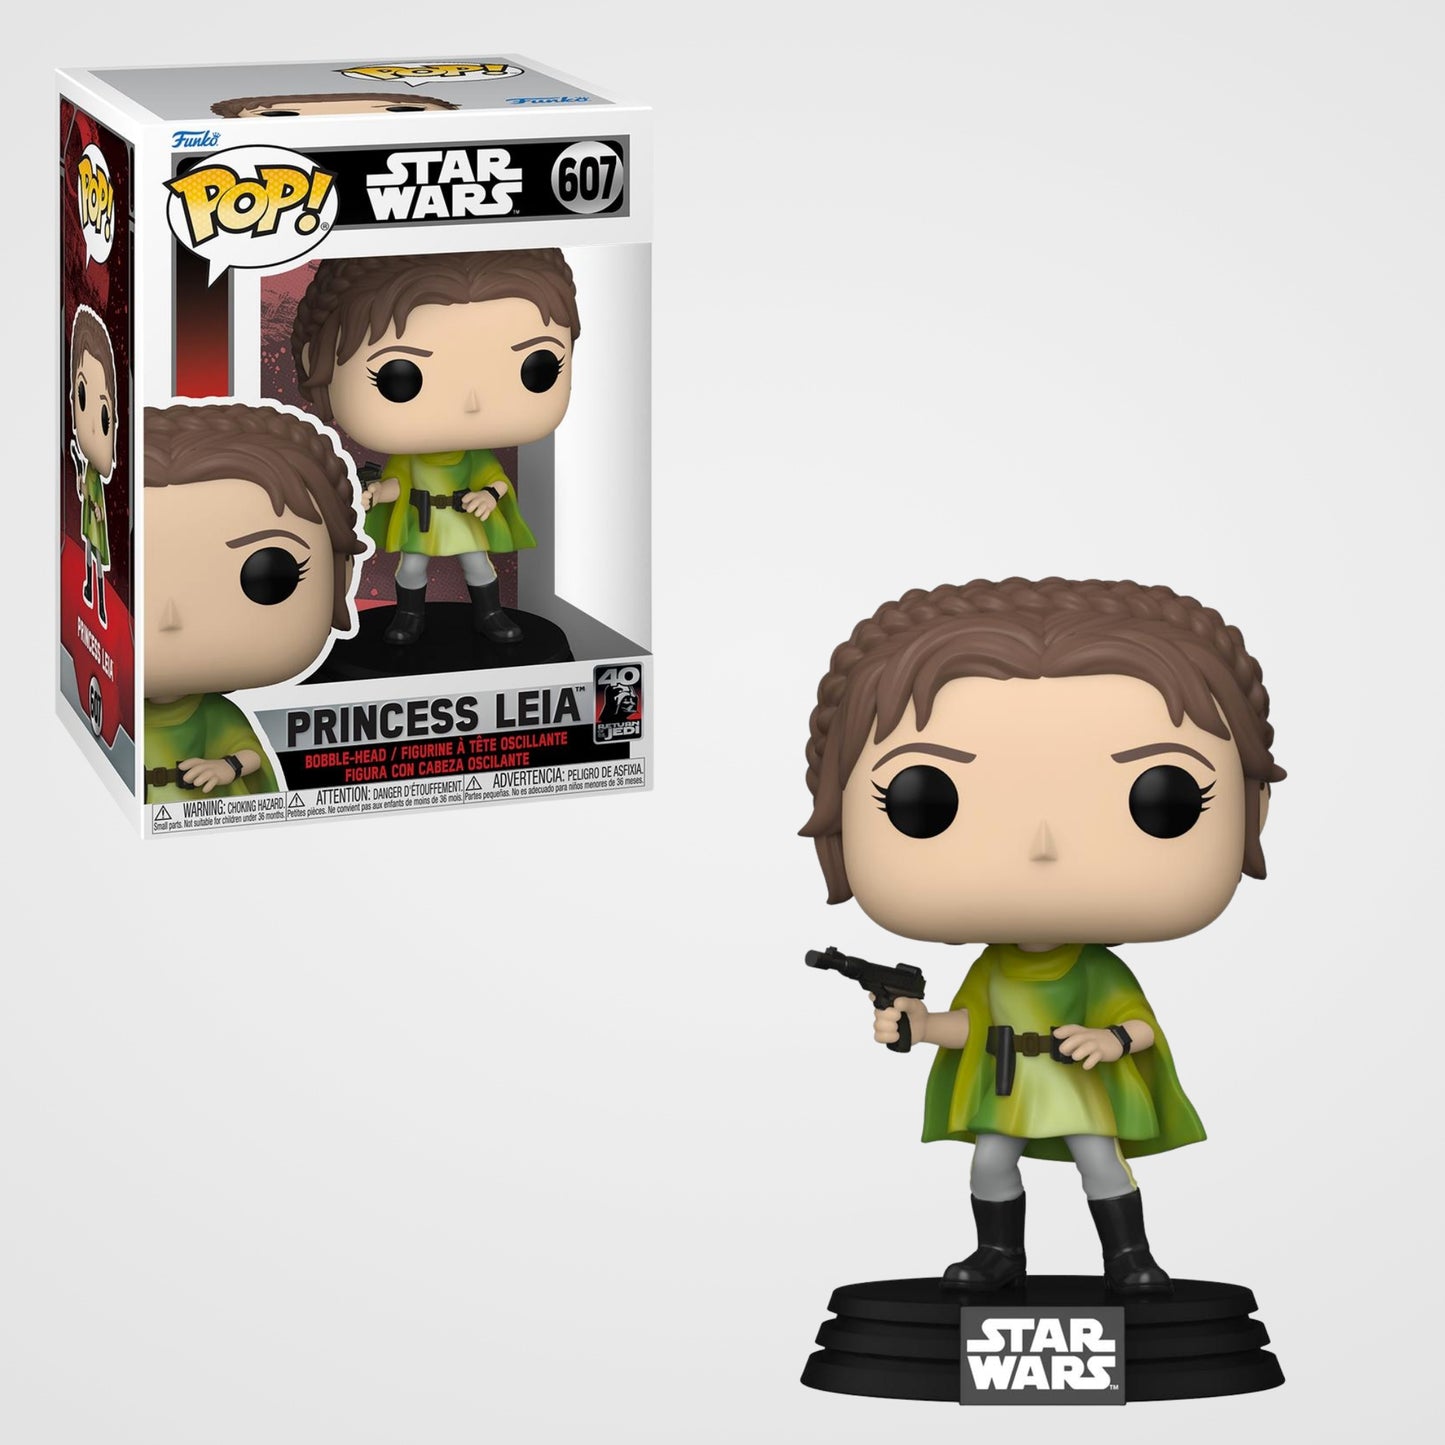  Princess Leia (Star Wars) Return of the Jedi 40th Anniversary Funko Pop!